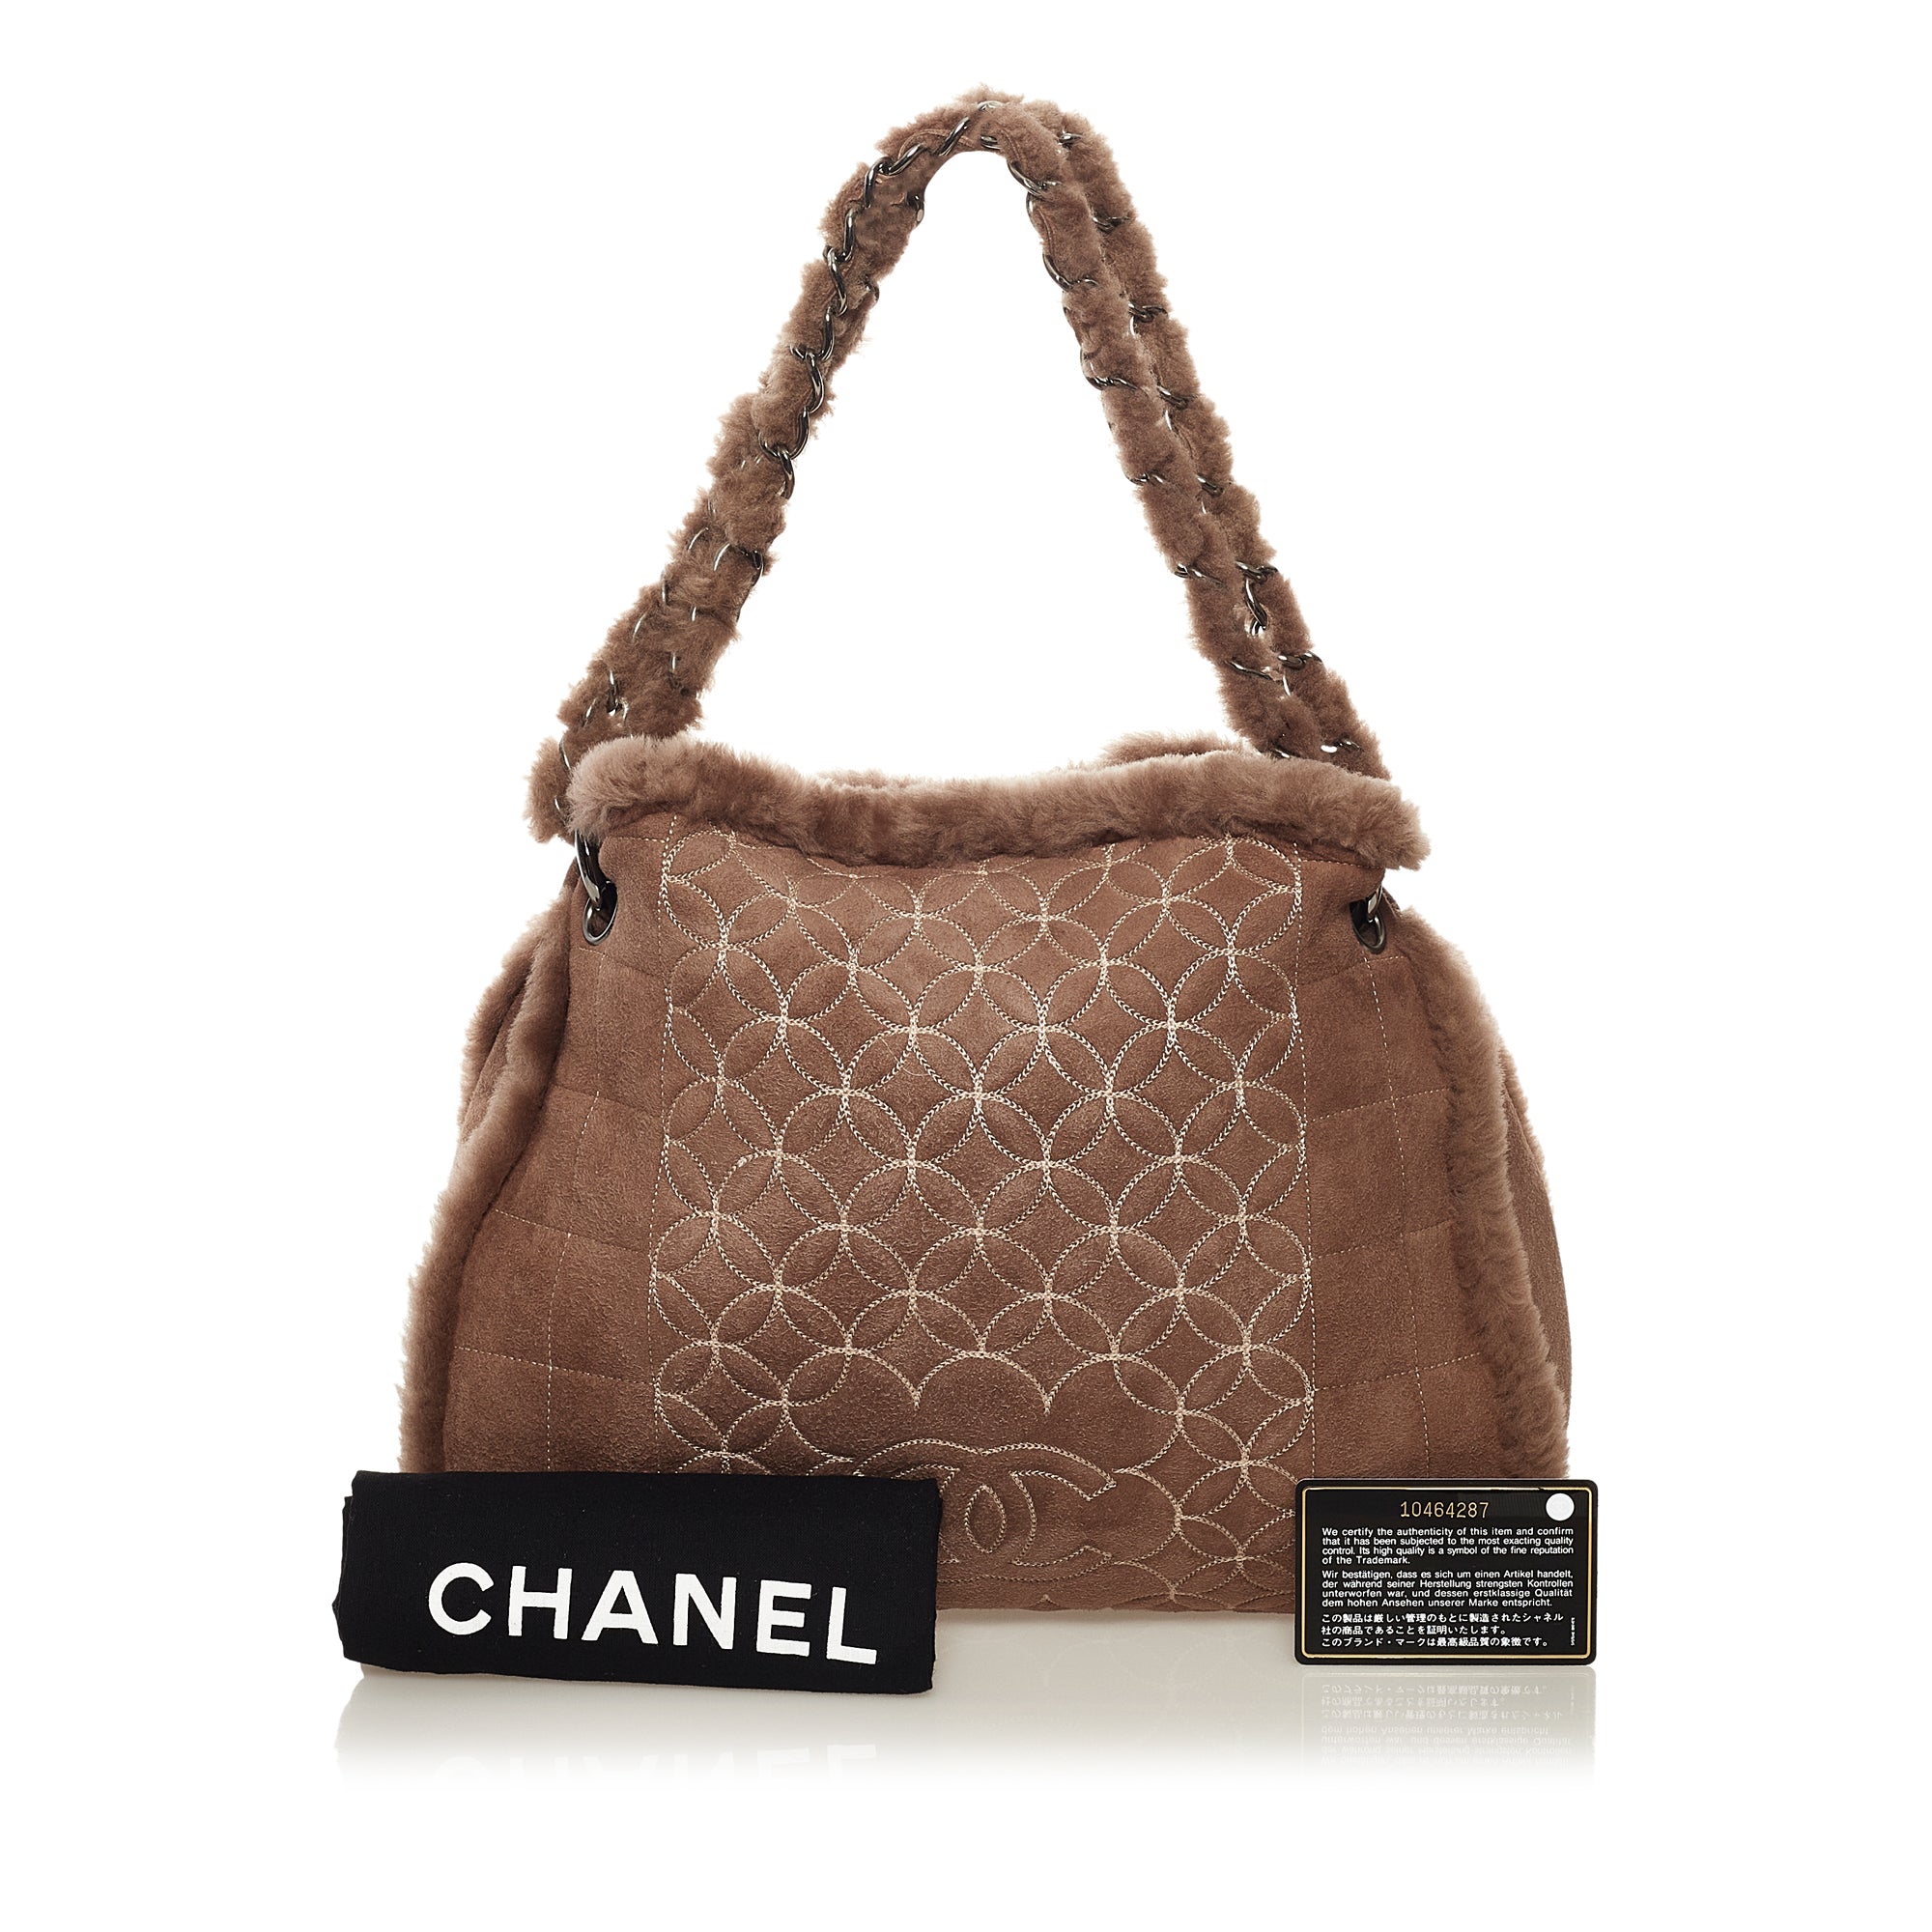 chanel precision bag ,, fuzzy brown bag that’s so